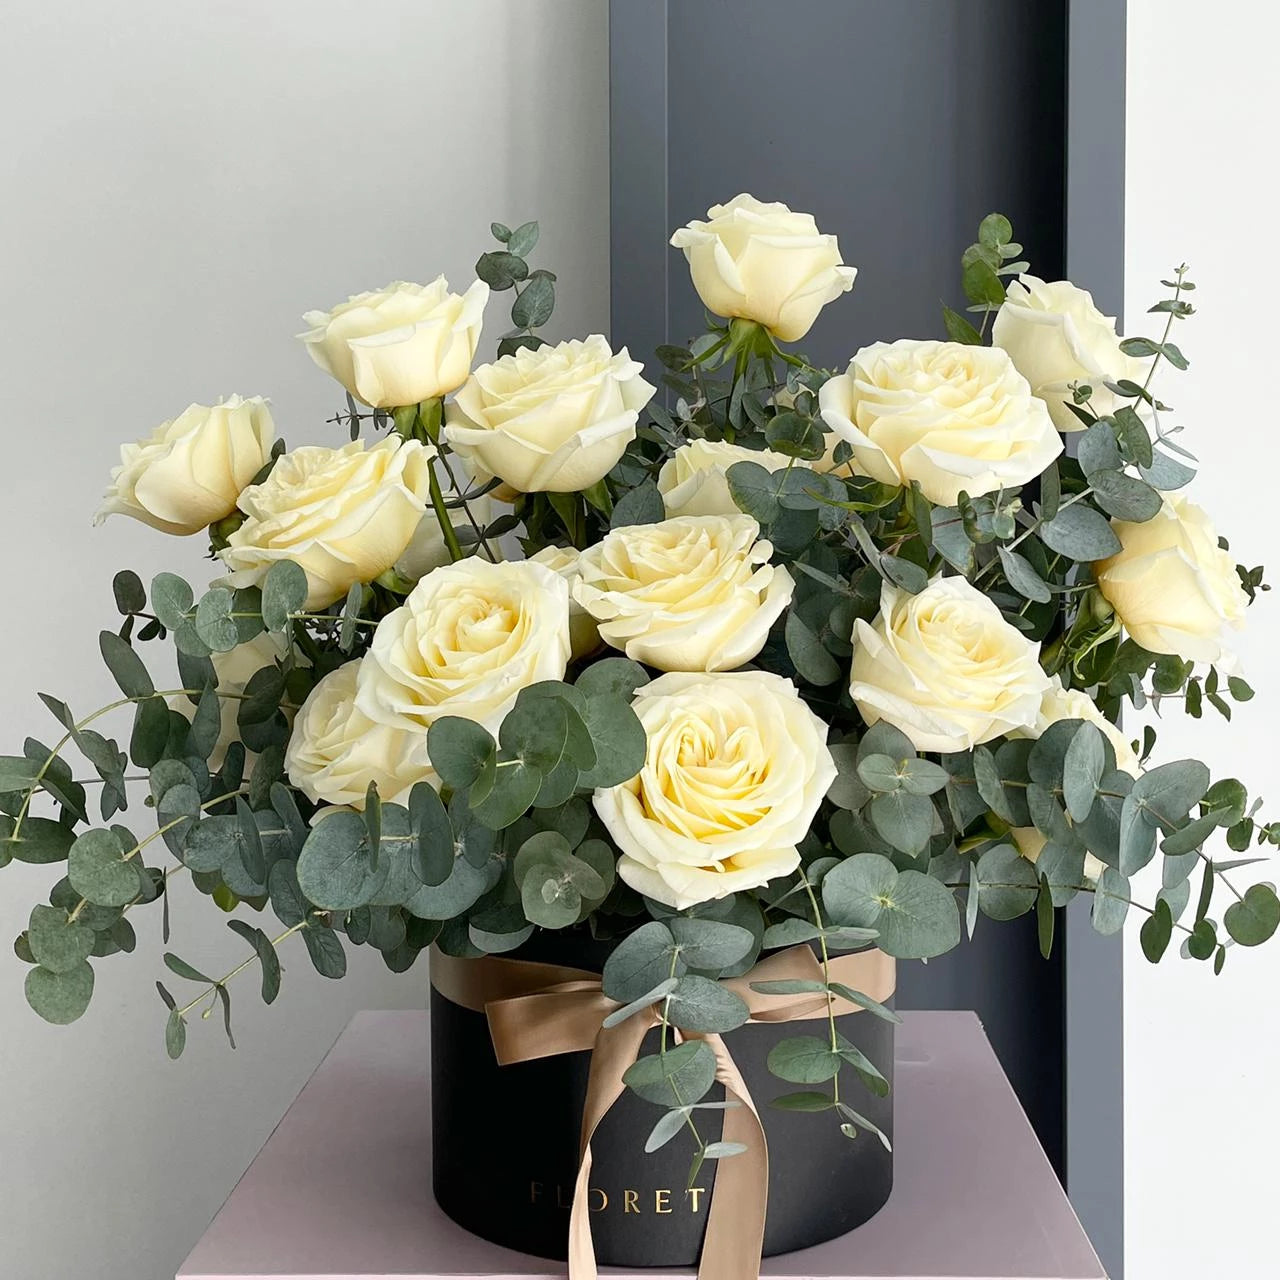 Florette's classic and elegant ROME medium floral box arrangement with 15 white roses and eucalyptus cinerea.